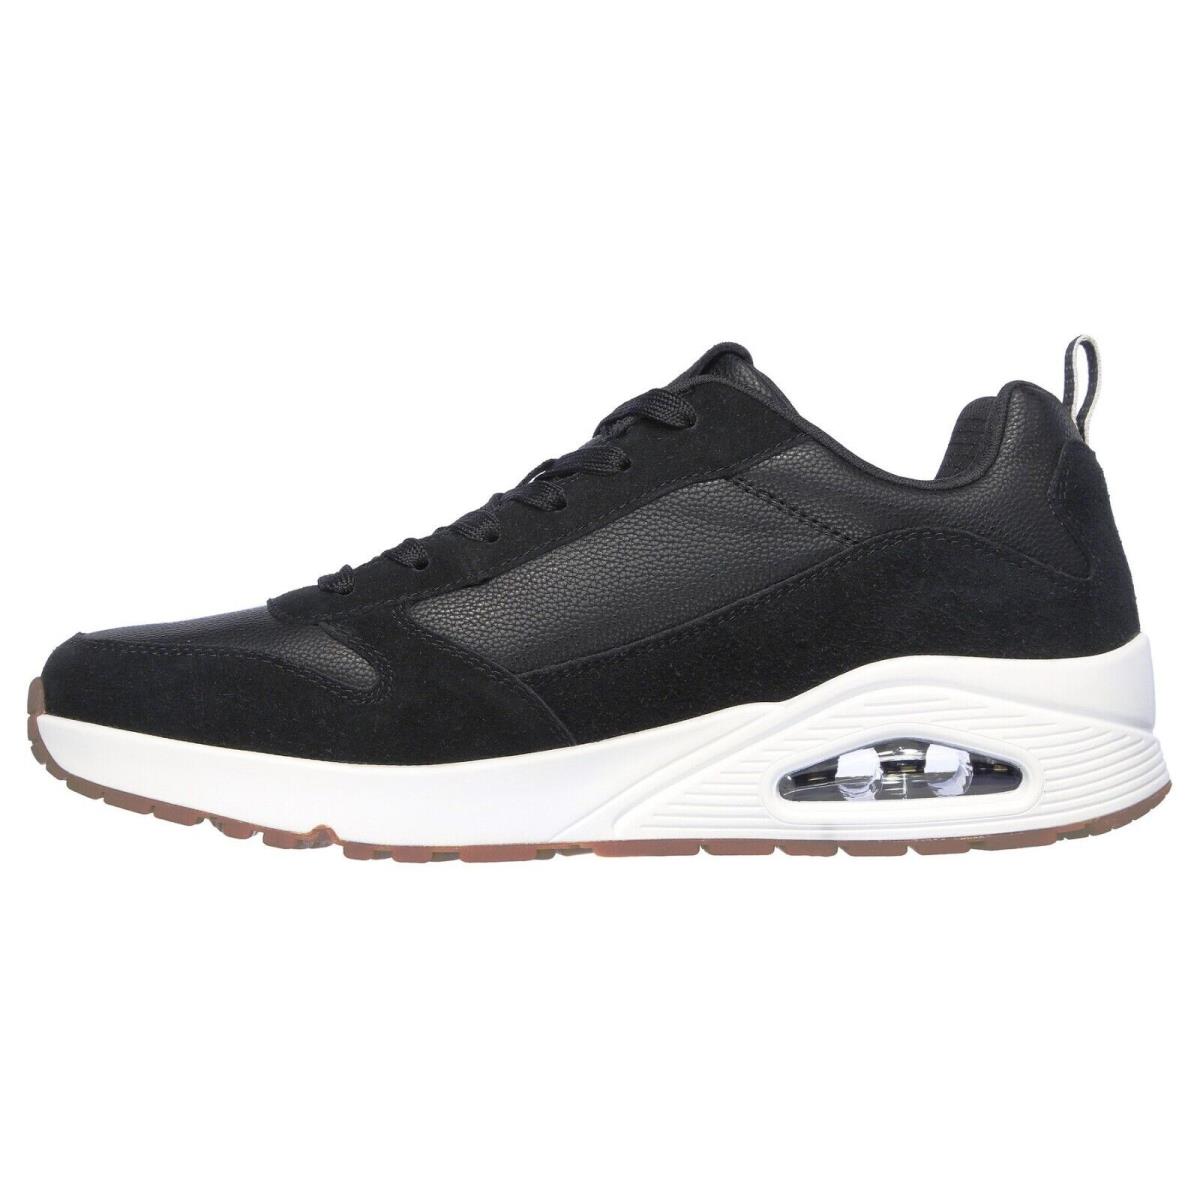 Skechers shoes Uno Stacre - Black/White 2